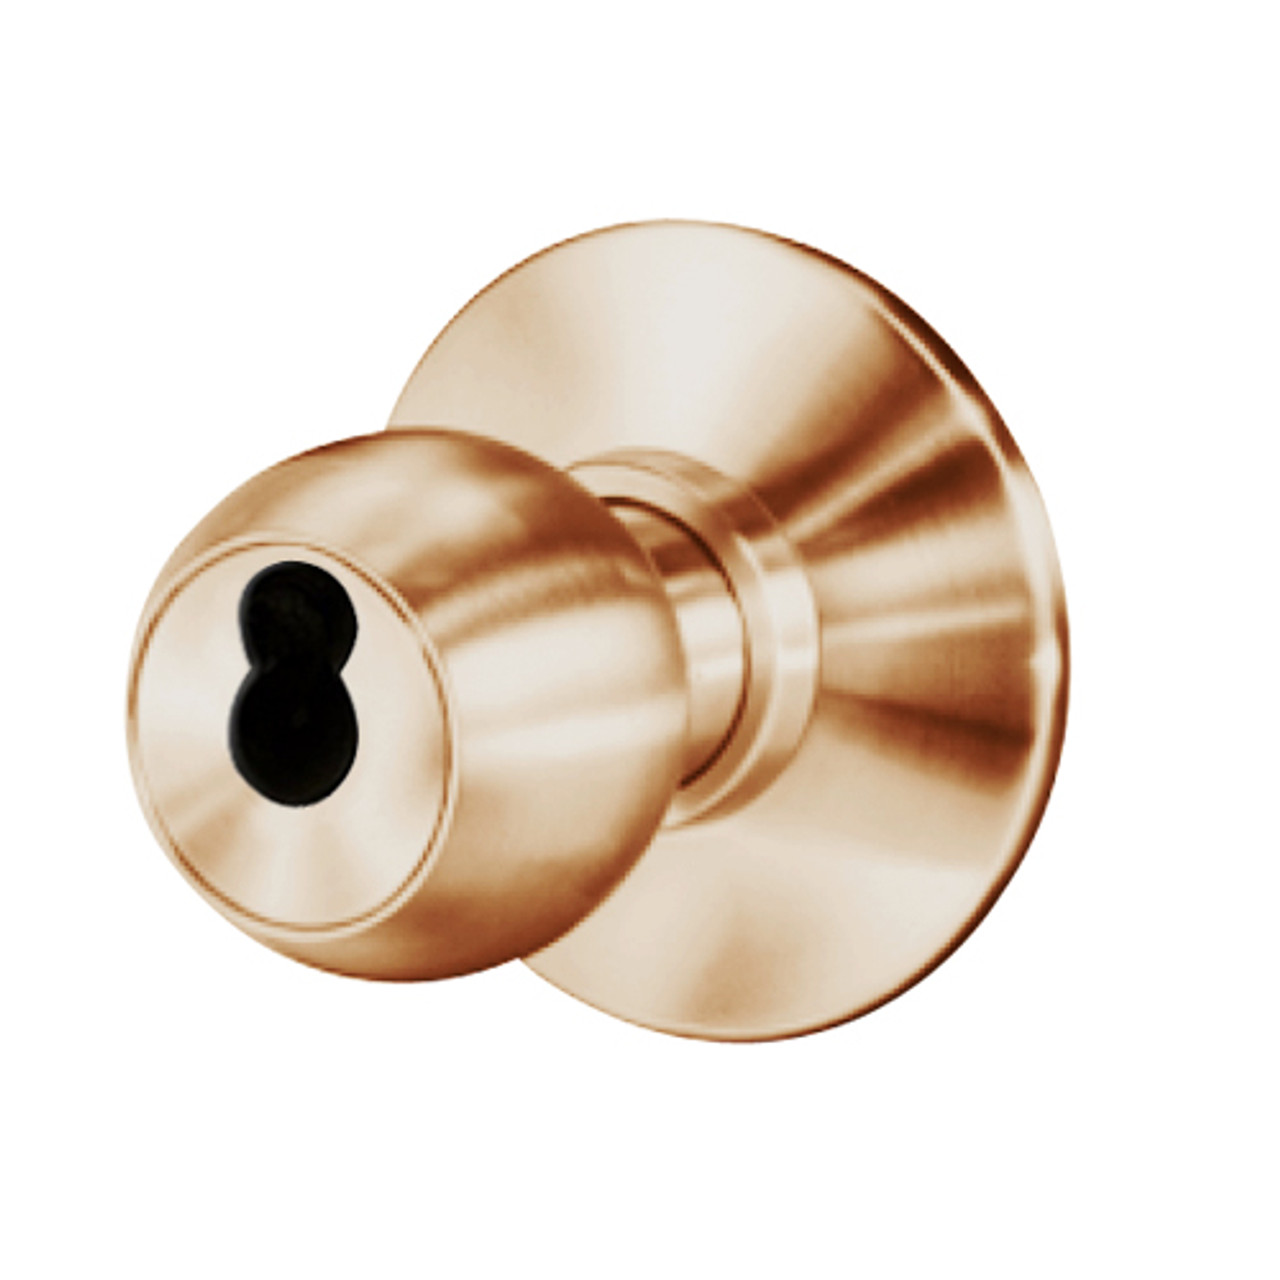 8K37YR4DSTK612 Best 8K Series Exit Heavy Duty Cylindrical Knob Locks with Round Style in Satin Bronze